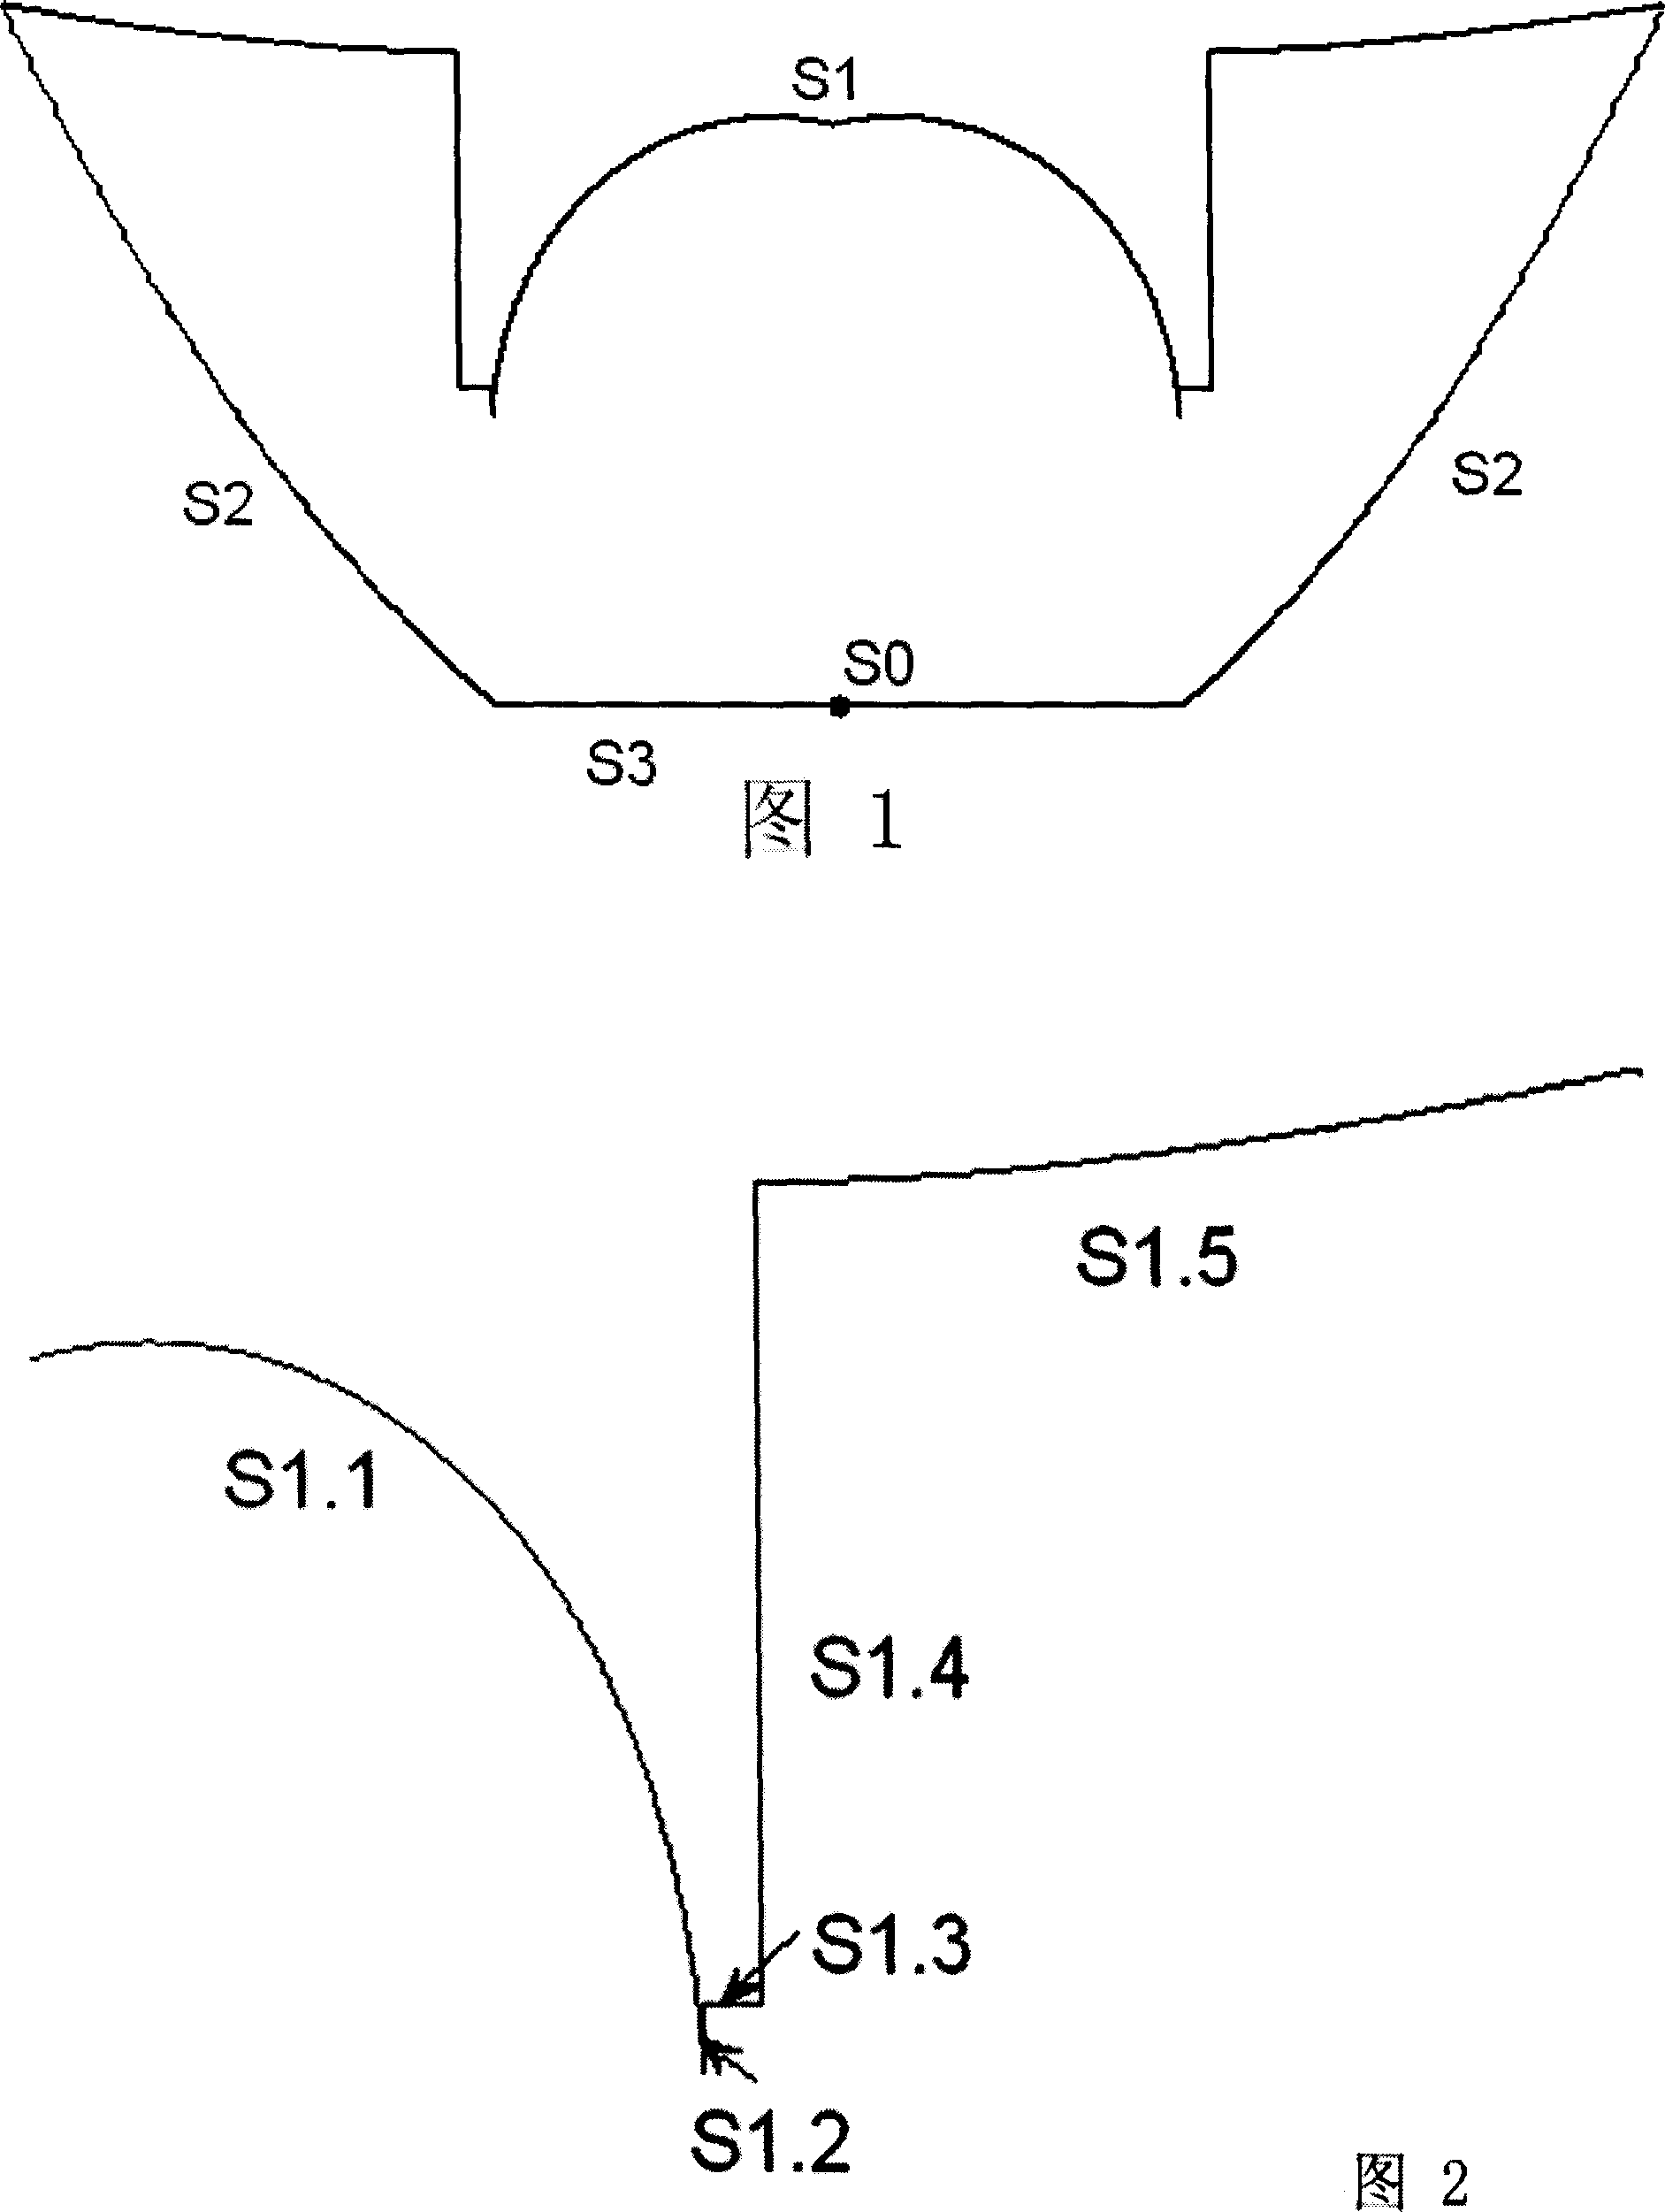 Refraction free curve design method for uniform lighting and its lens